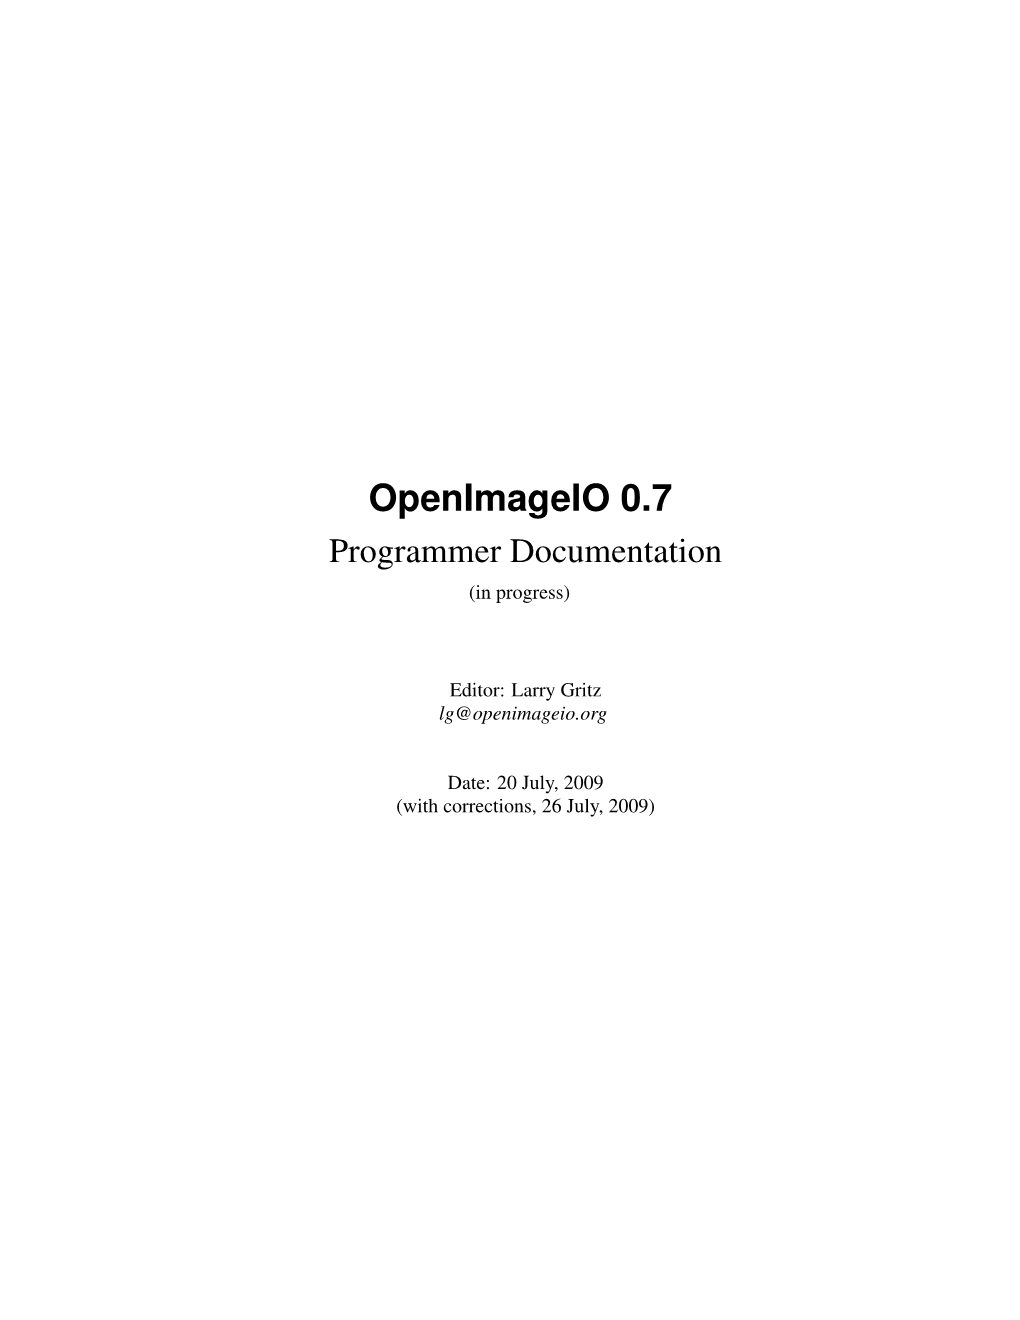 Openimageio 0.7 Programmer Documentation (In Progress)